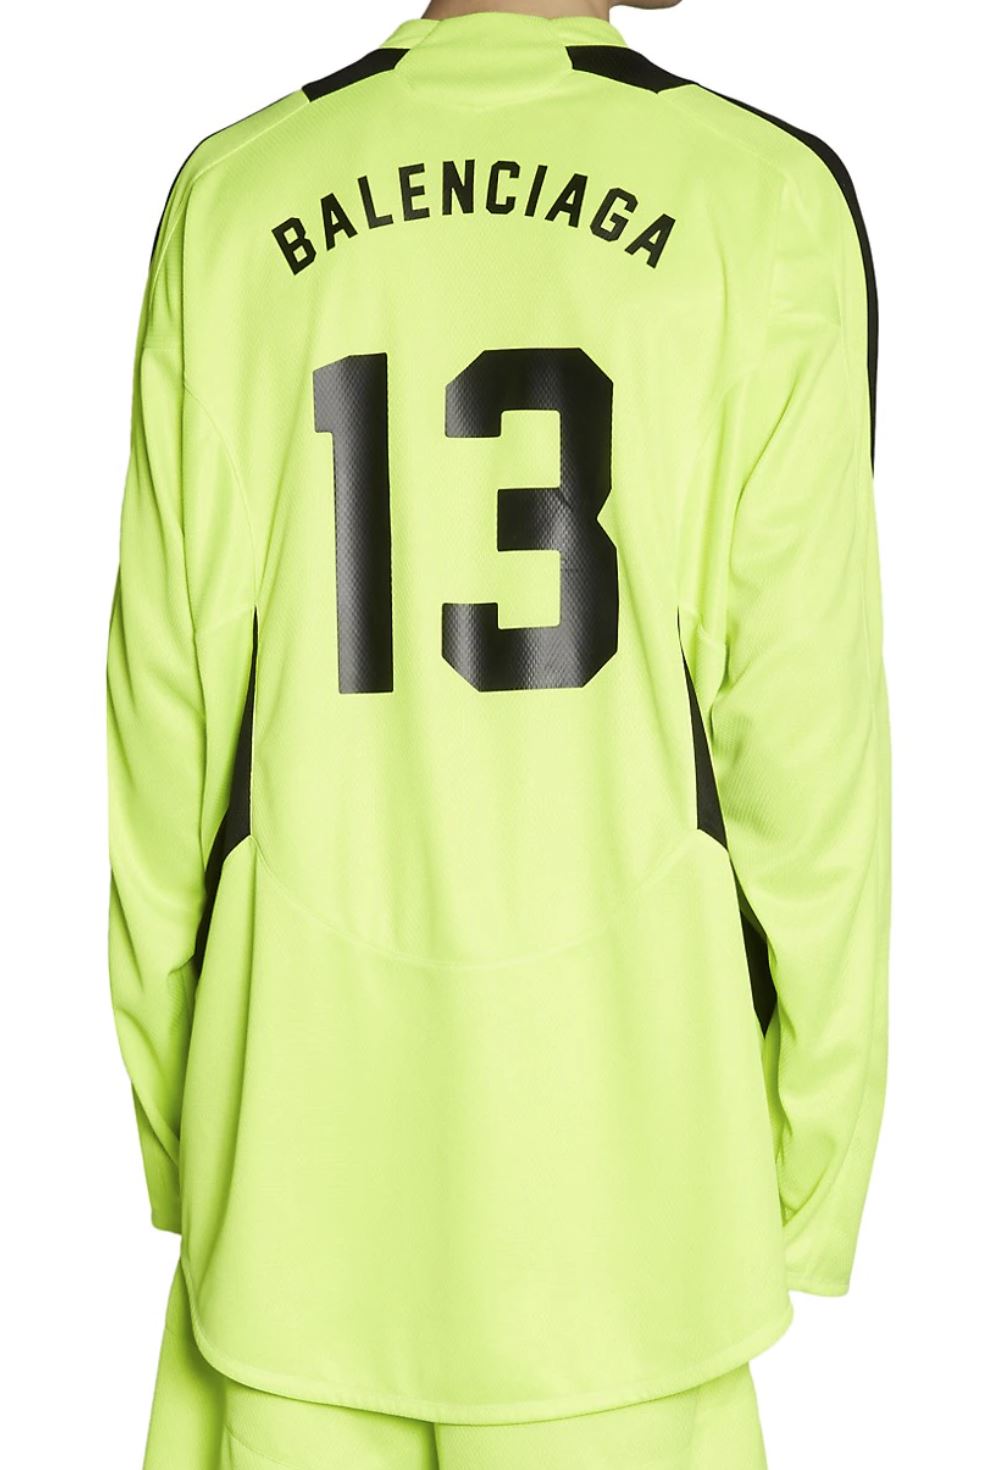 NWT 1190 $ Balenciaga Langarm-Fußball-T-Shirt Gelb XL Hergestellt in Portugal 